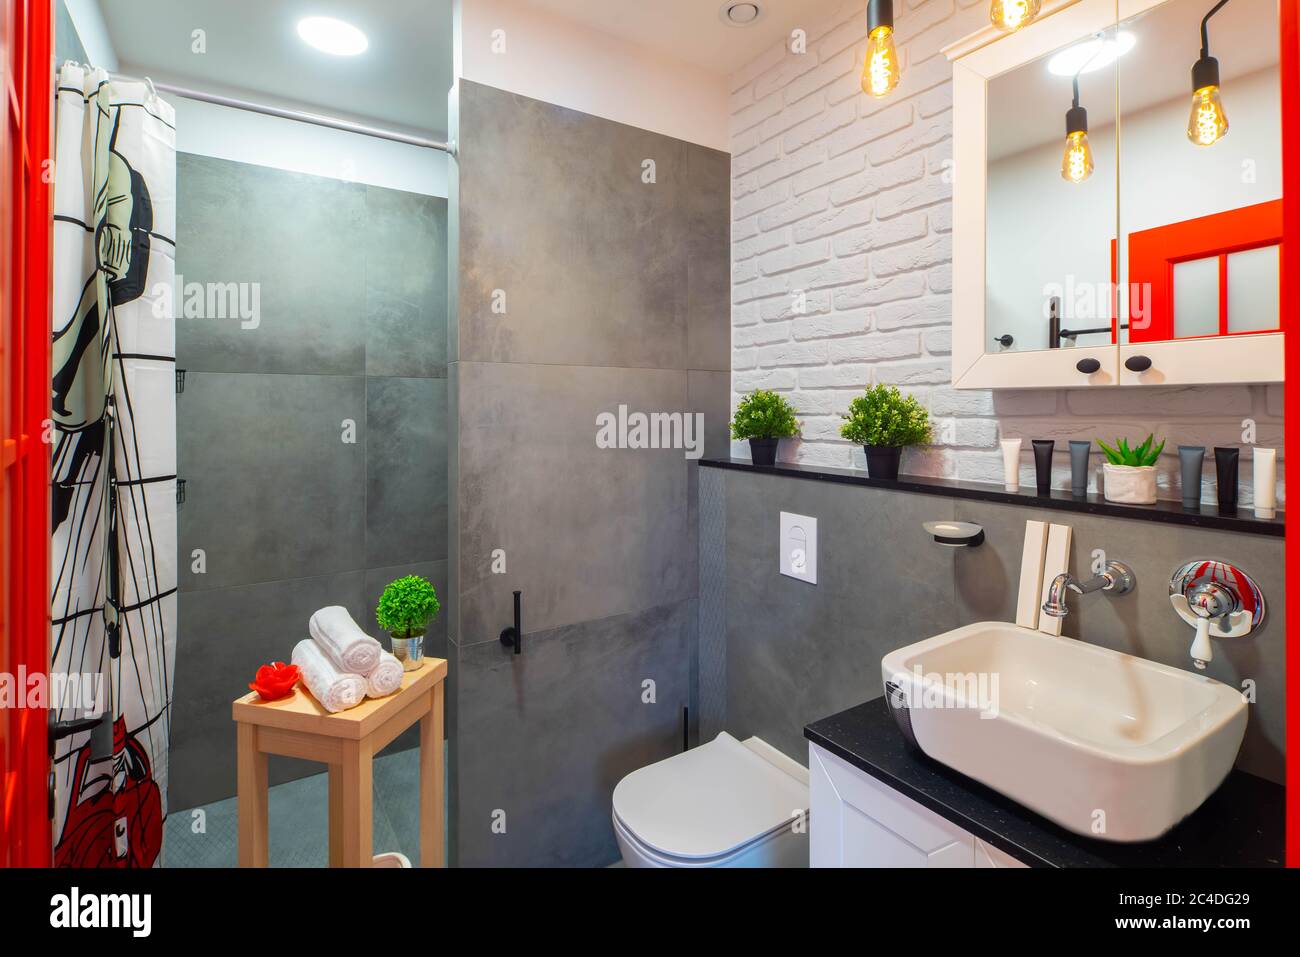 Red spazzola per WC, spazzola per WC Foto stock - Alamy